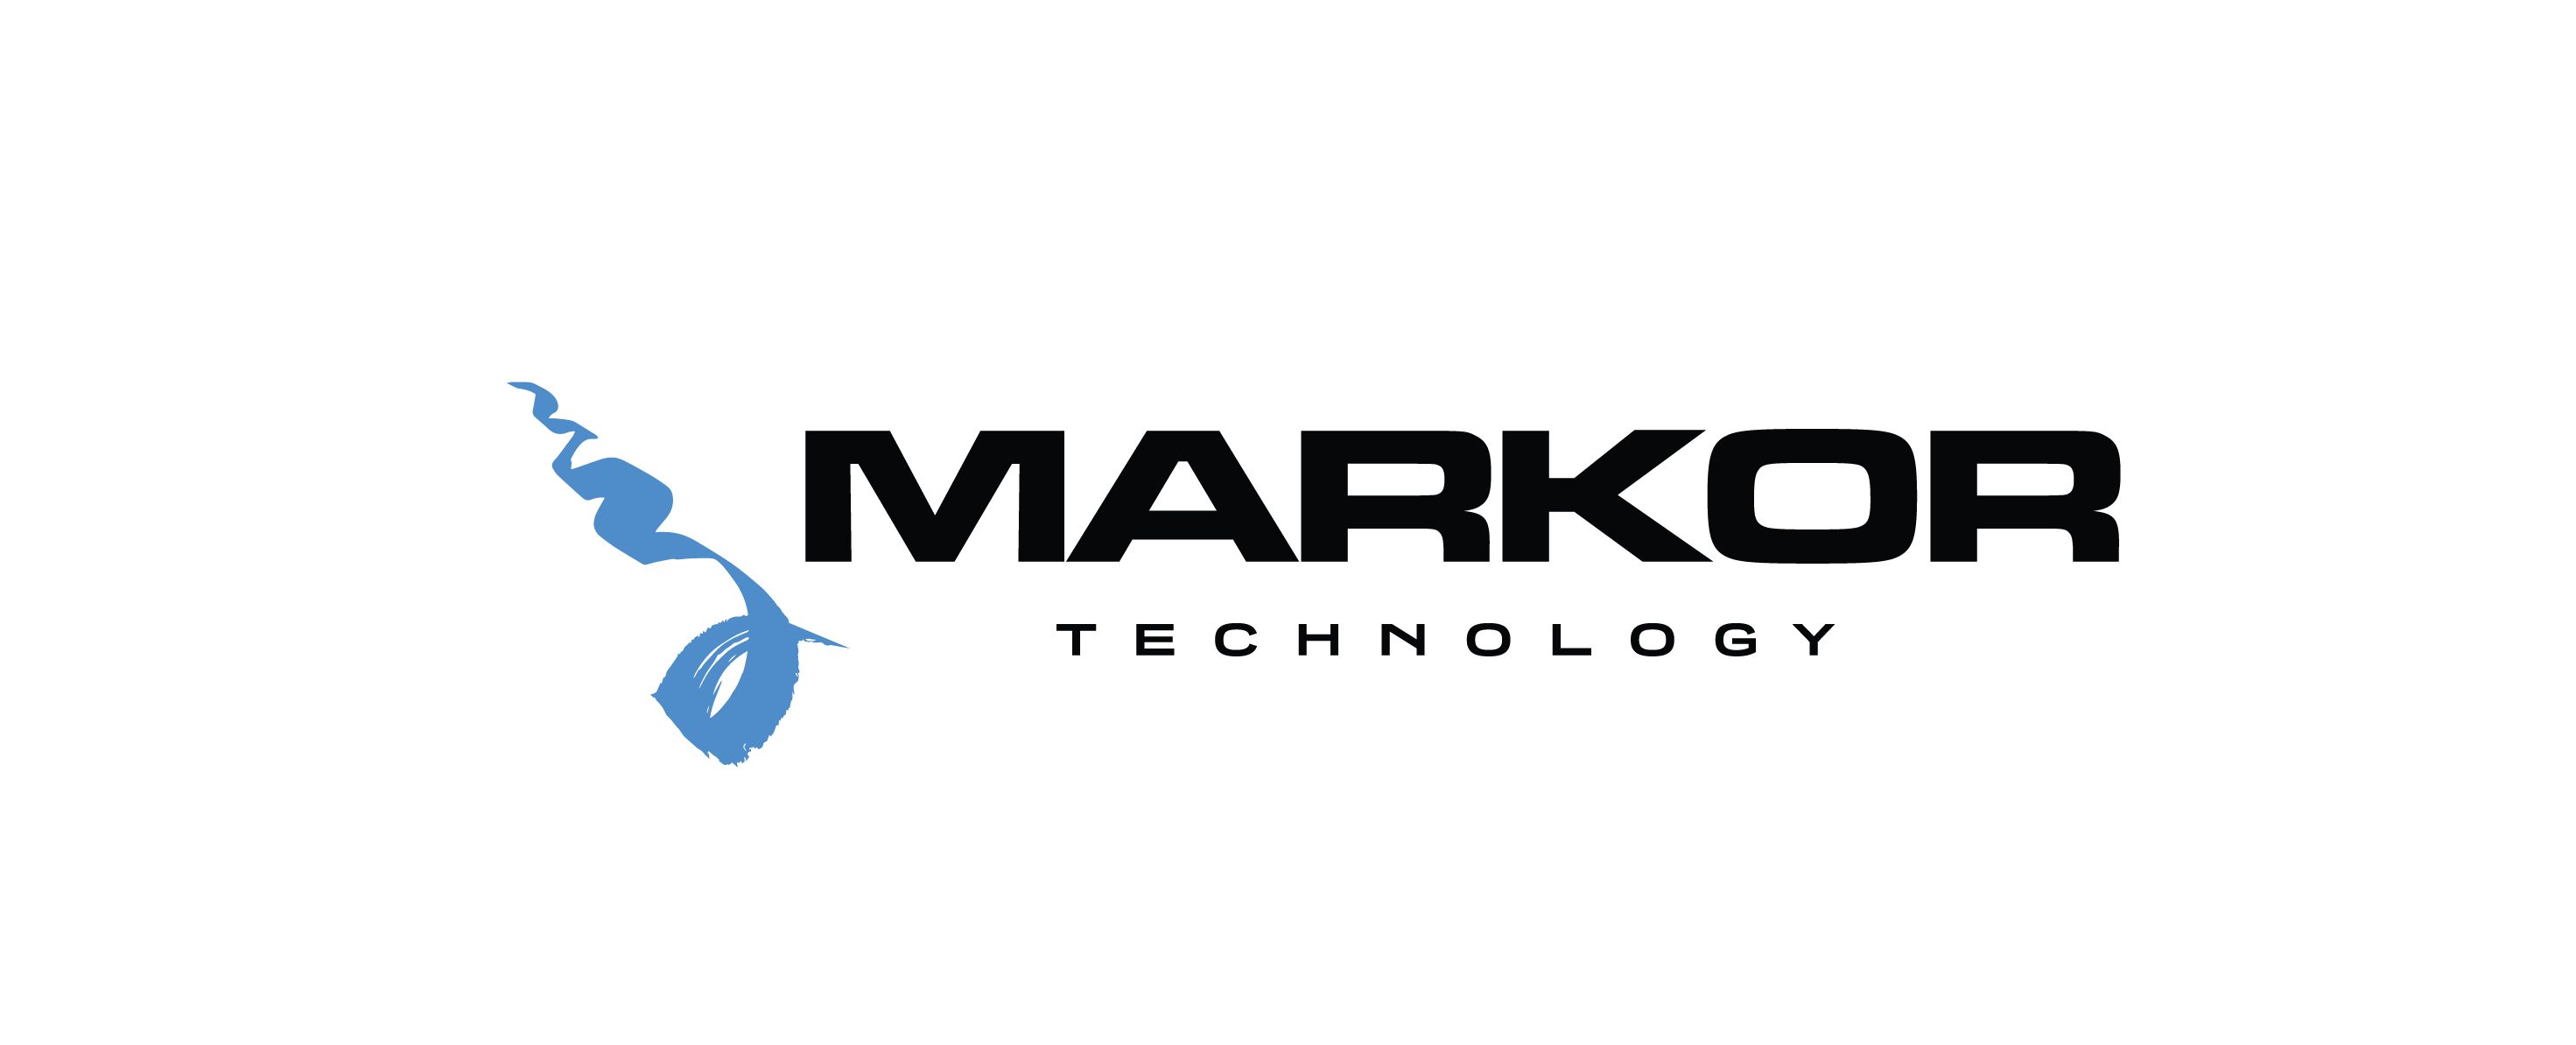 Markor Technology गेम्स